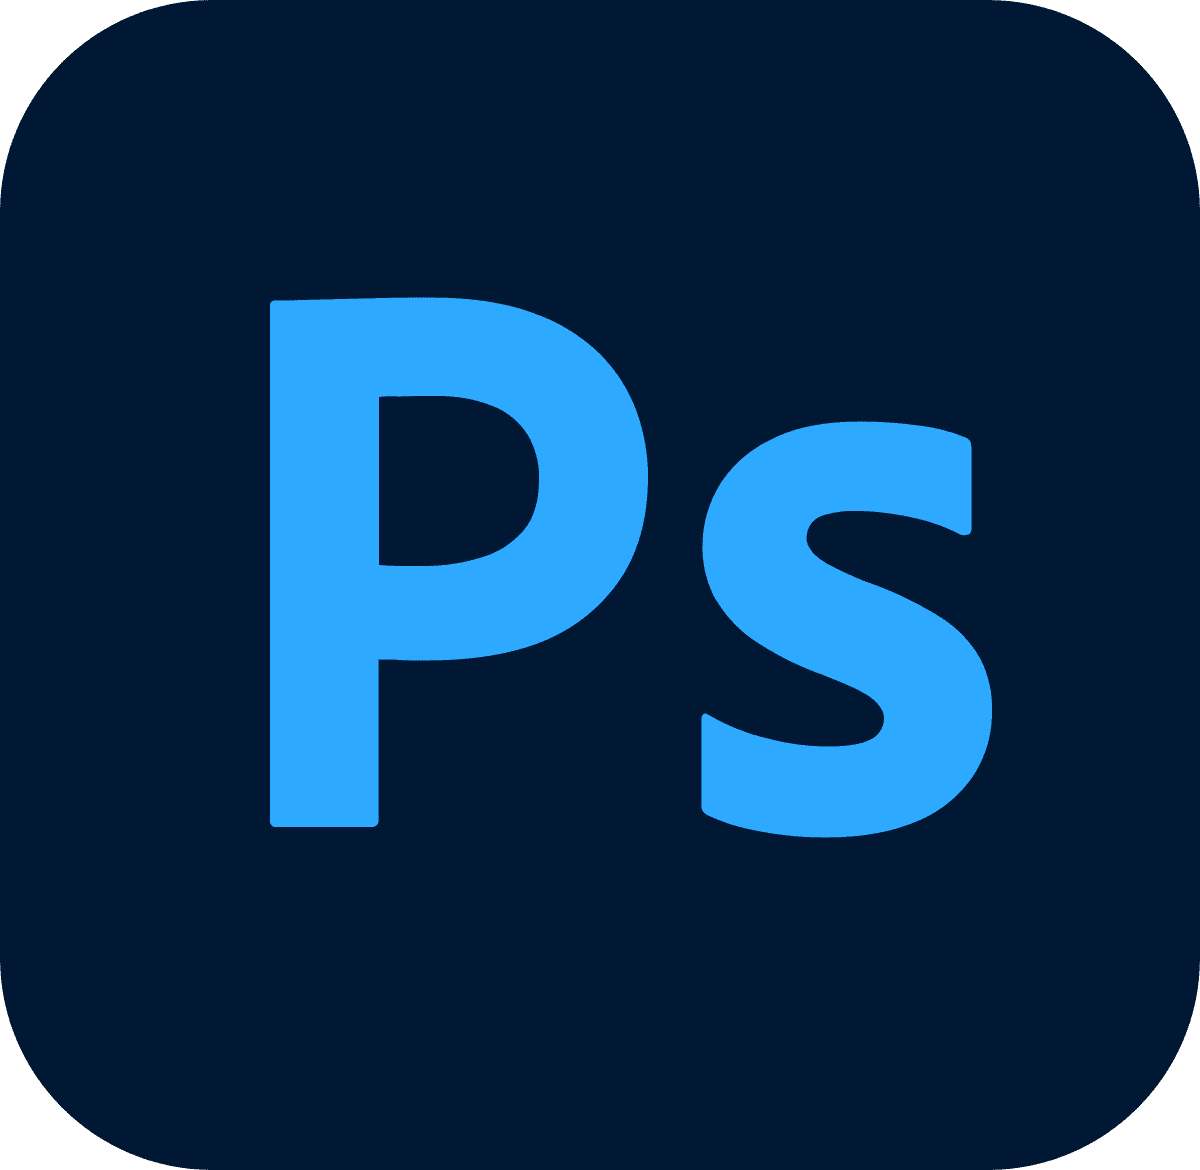 Download Adobe Photoshop 2016 Full Version